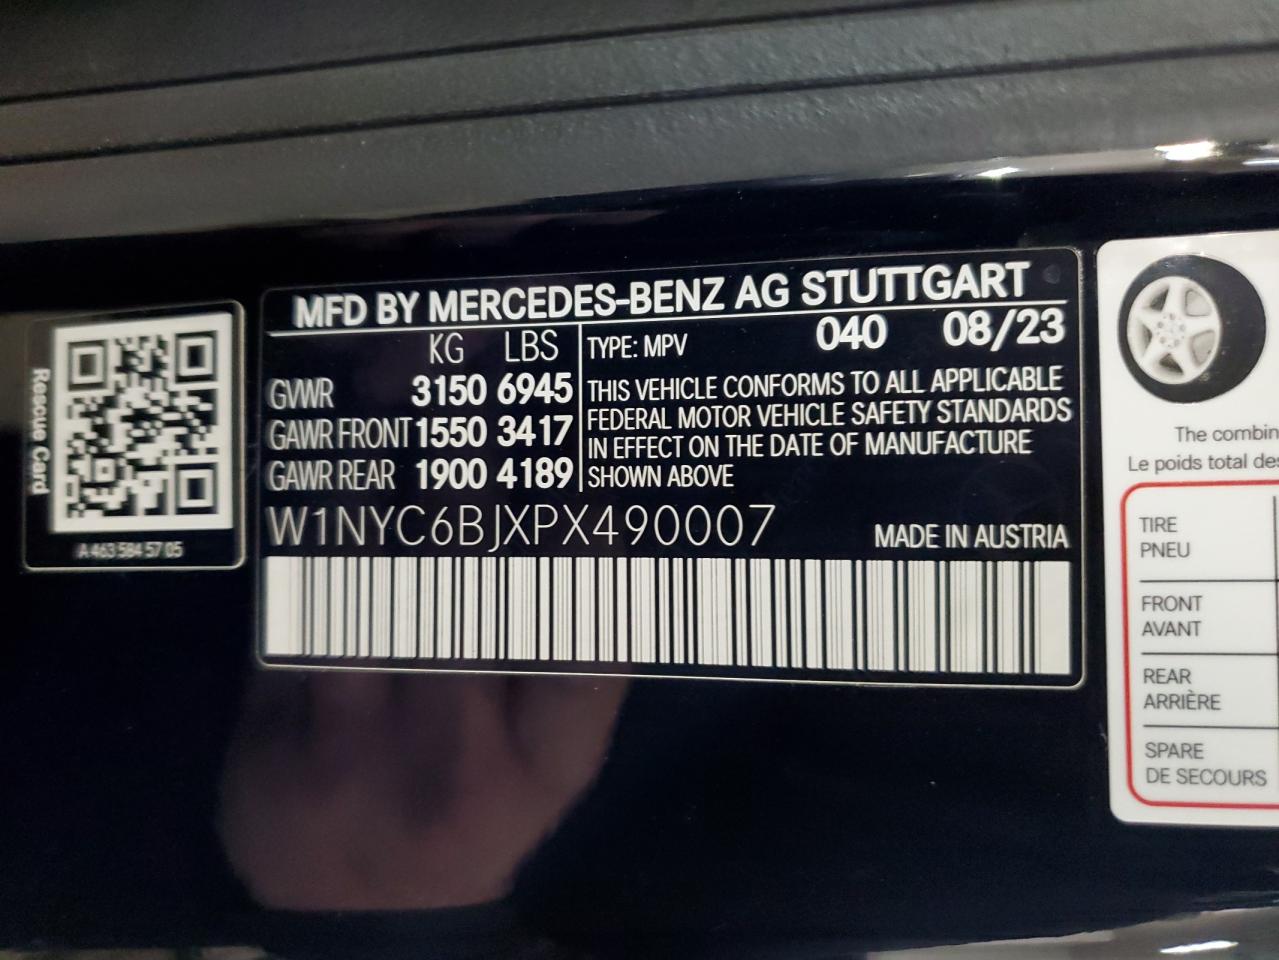 2023 MERCEDES-BENZ G 550 VIN:W1NYC6BJXPX490007